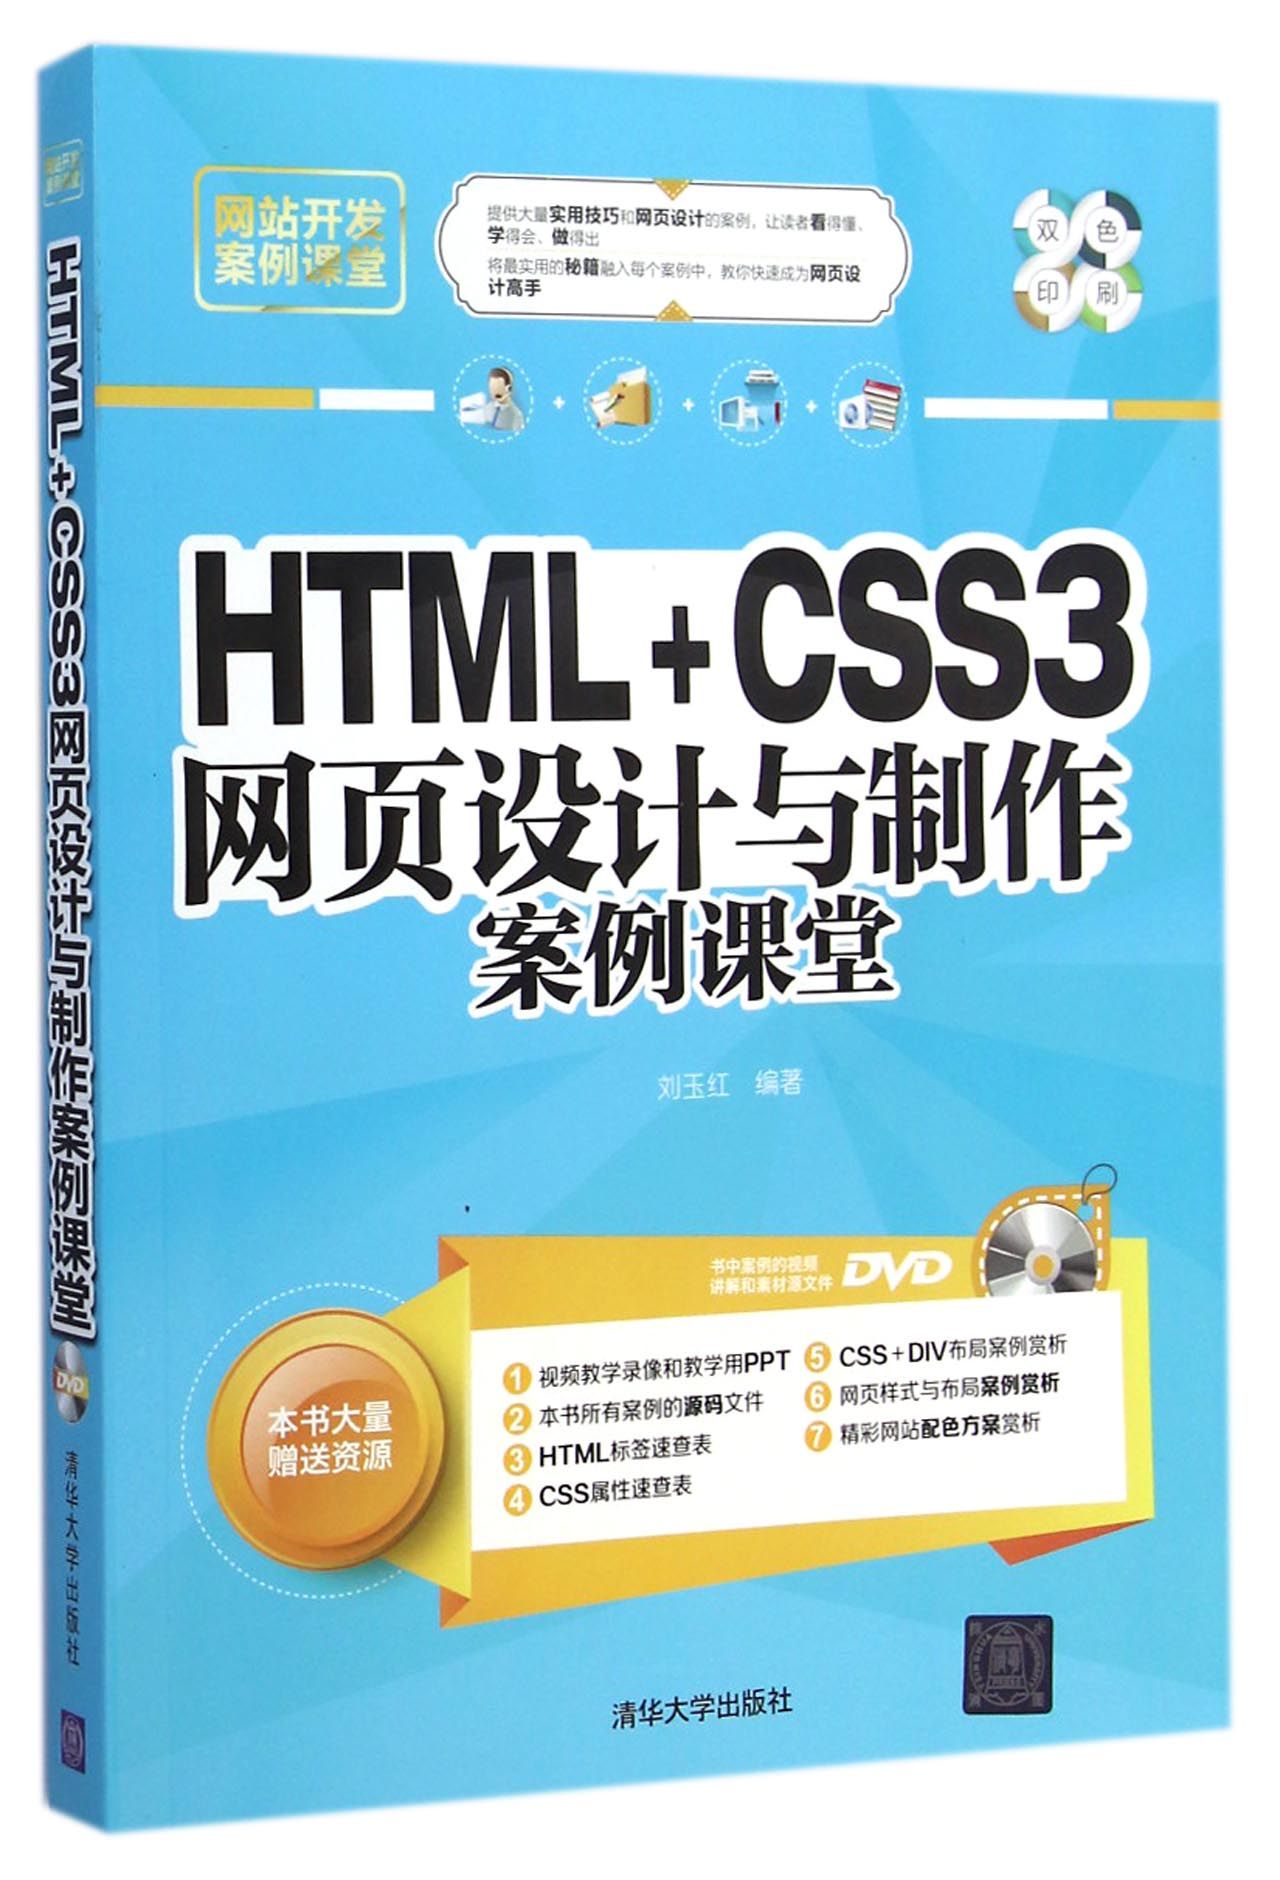 HTML+CSS3网页设计与制作案例课堂(附光盘